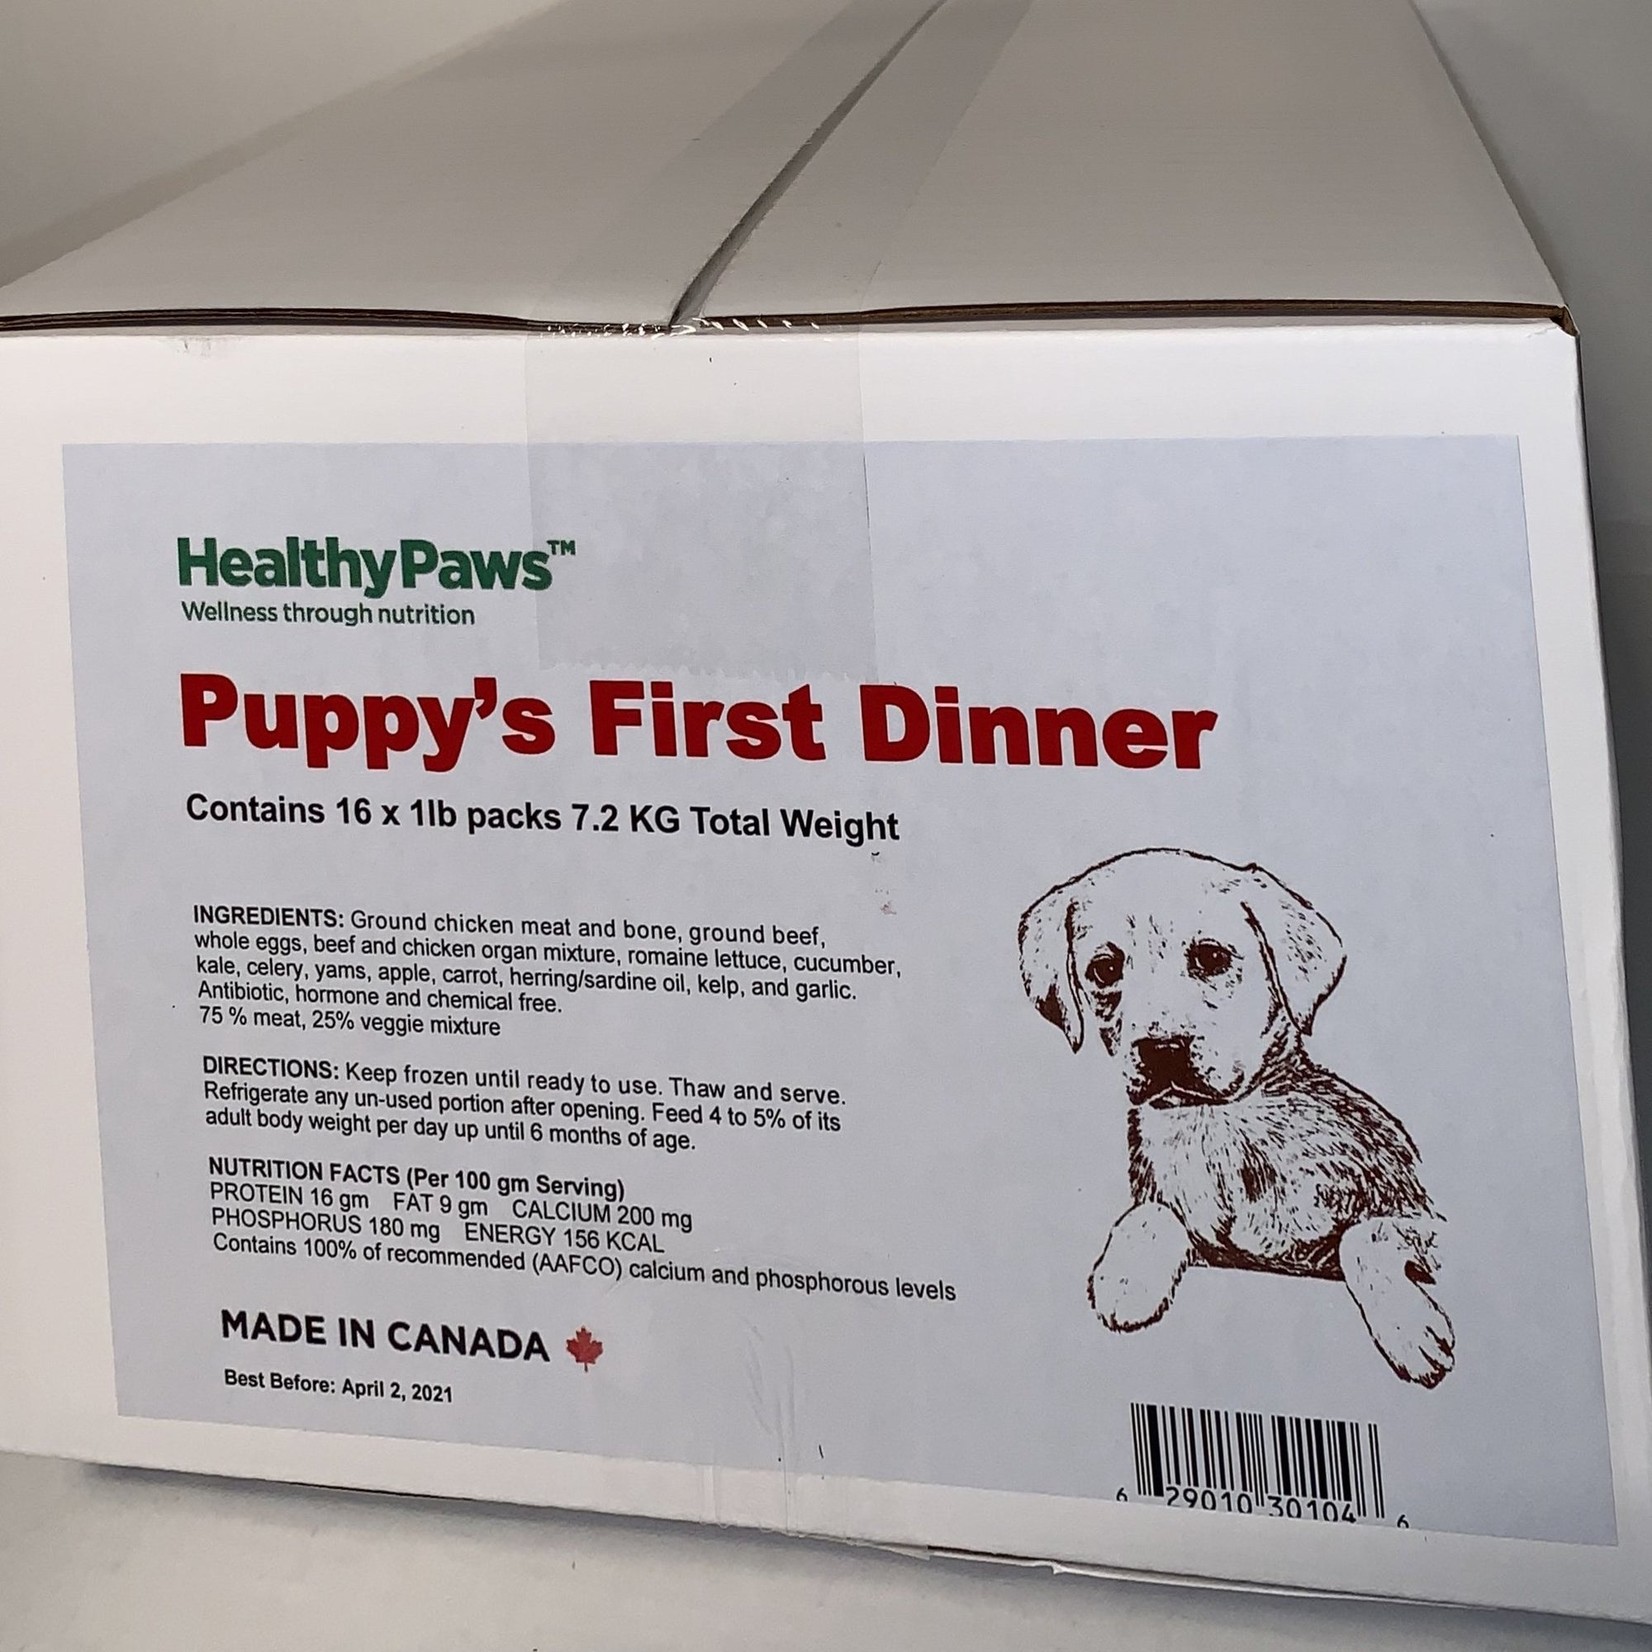 Healthy Paws Healthy Paws - Big Box Raw Dog Dinners